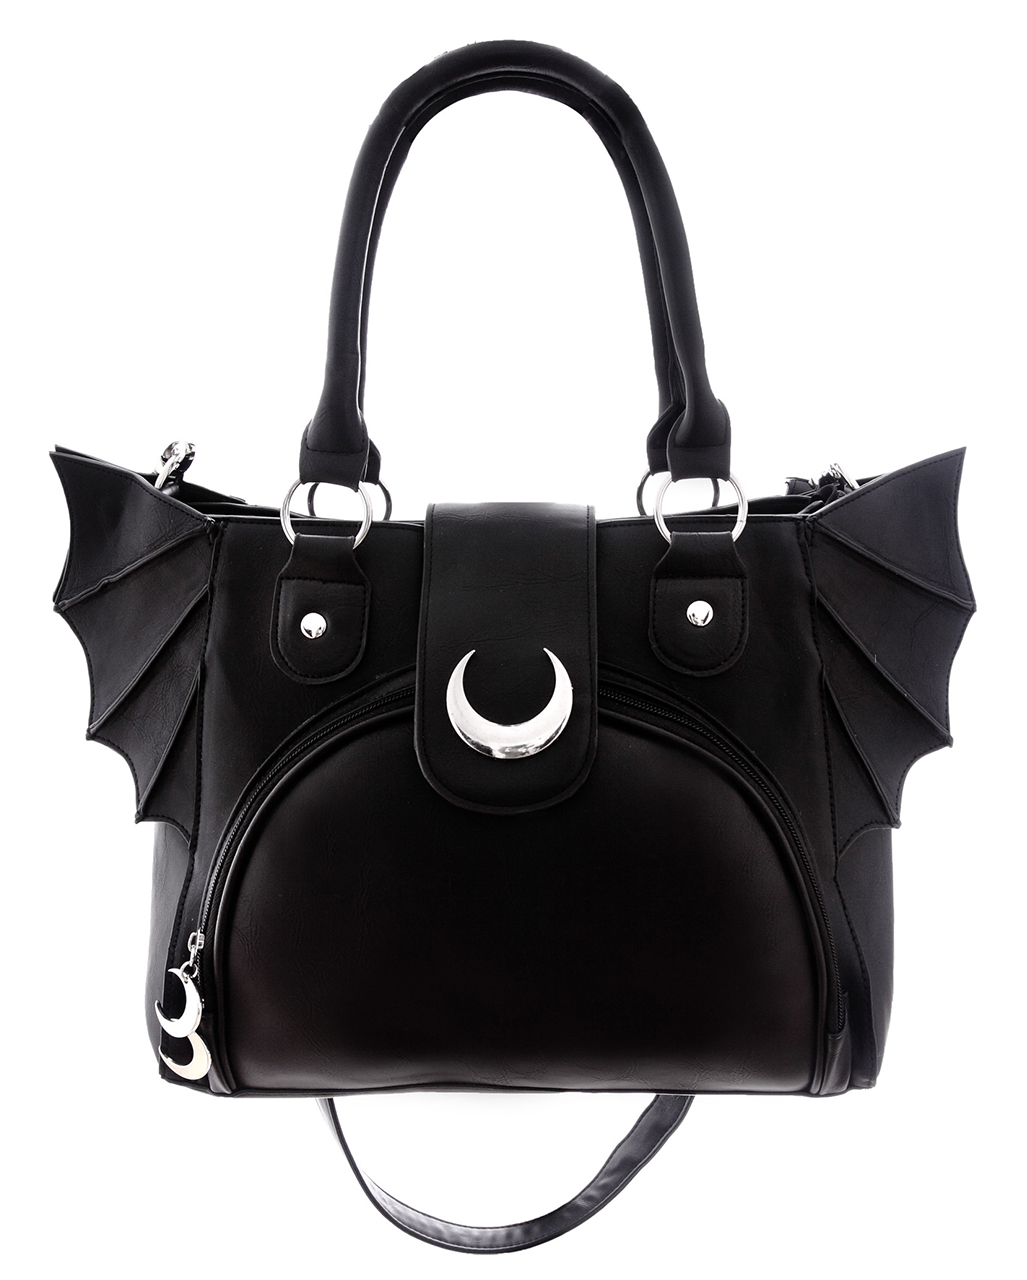 Buy Bat Witchy Goth Purse Black Horror Handbag Spooky Gothic Online in  India 